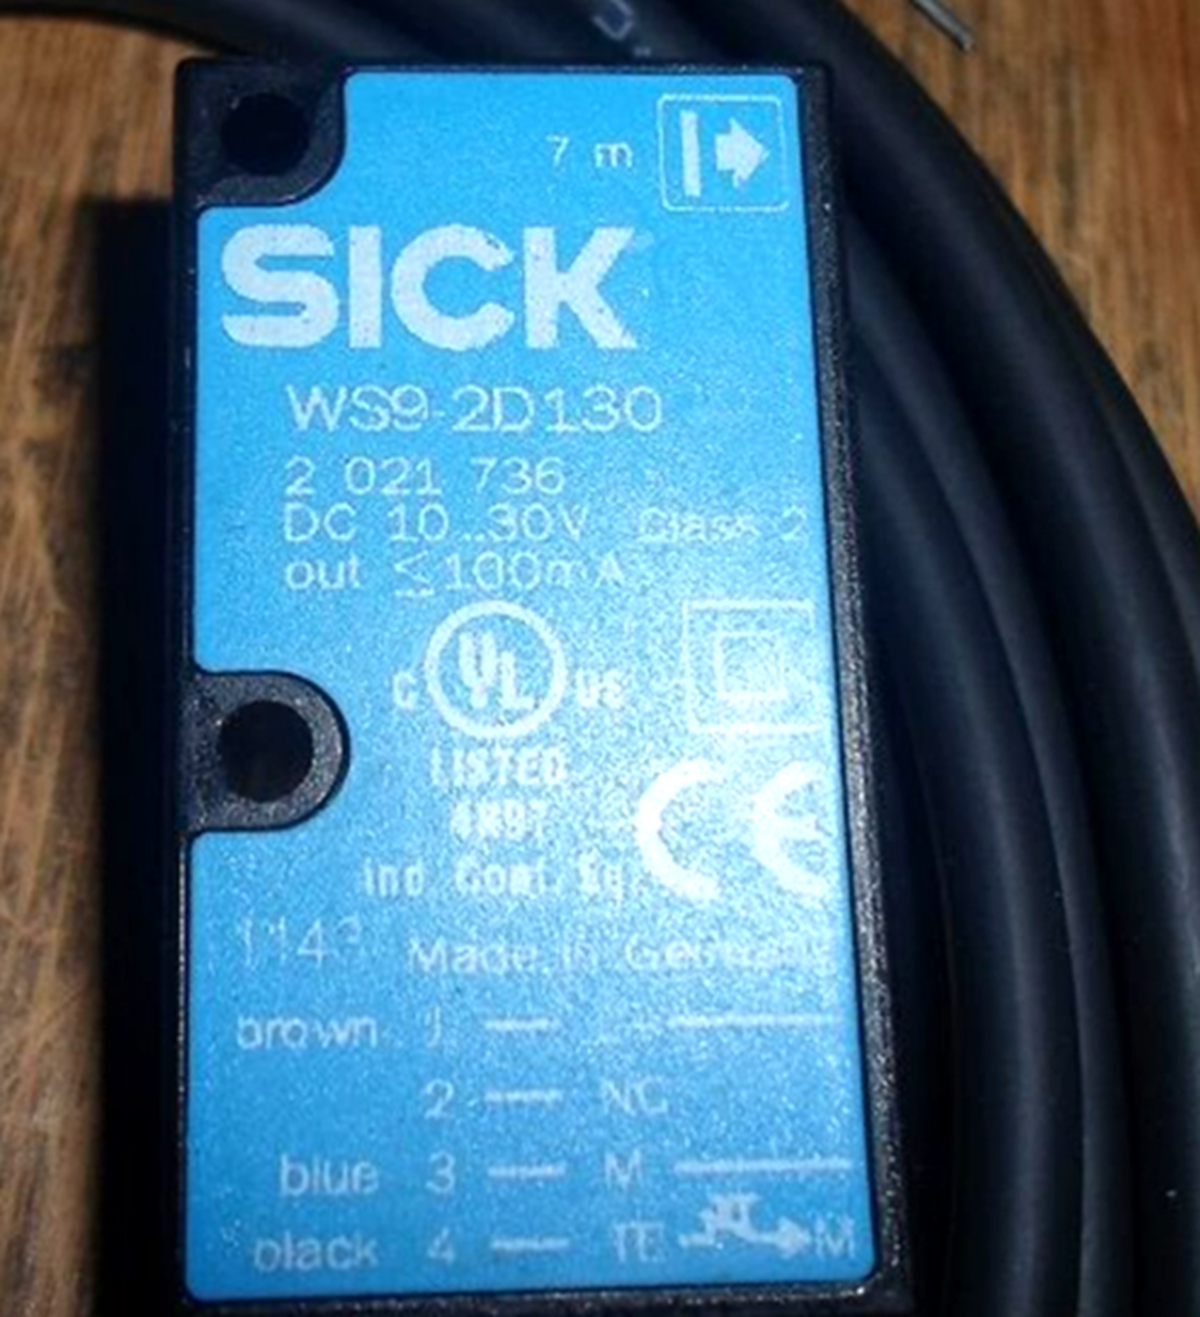 Sick WS9-2D130 Photoelectric Optic Switch Sensor 10~30 VDC 100mA WS92D130